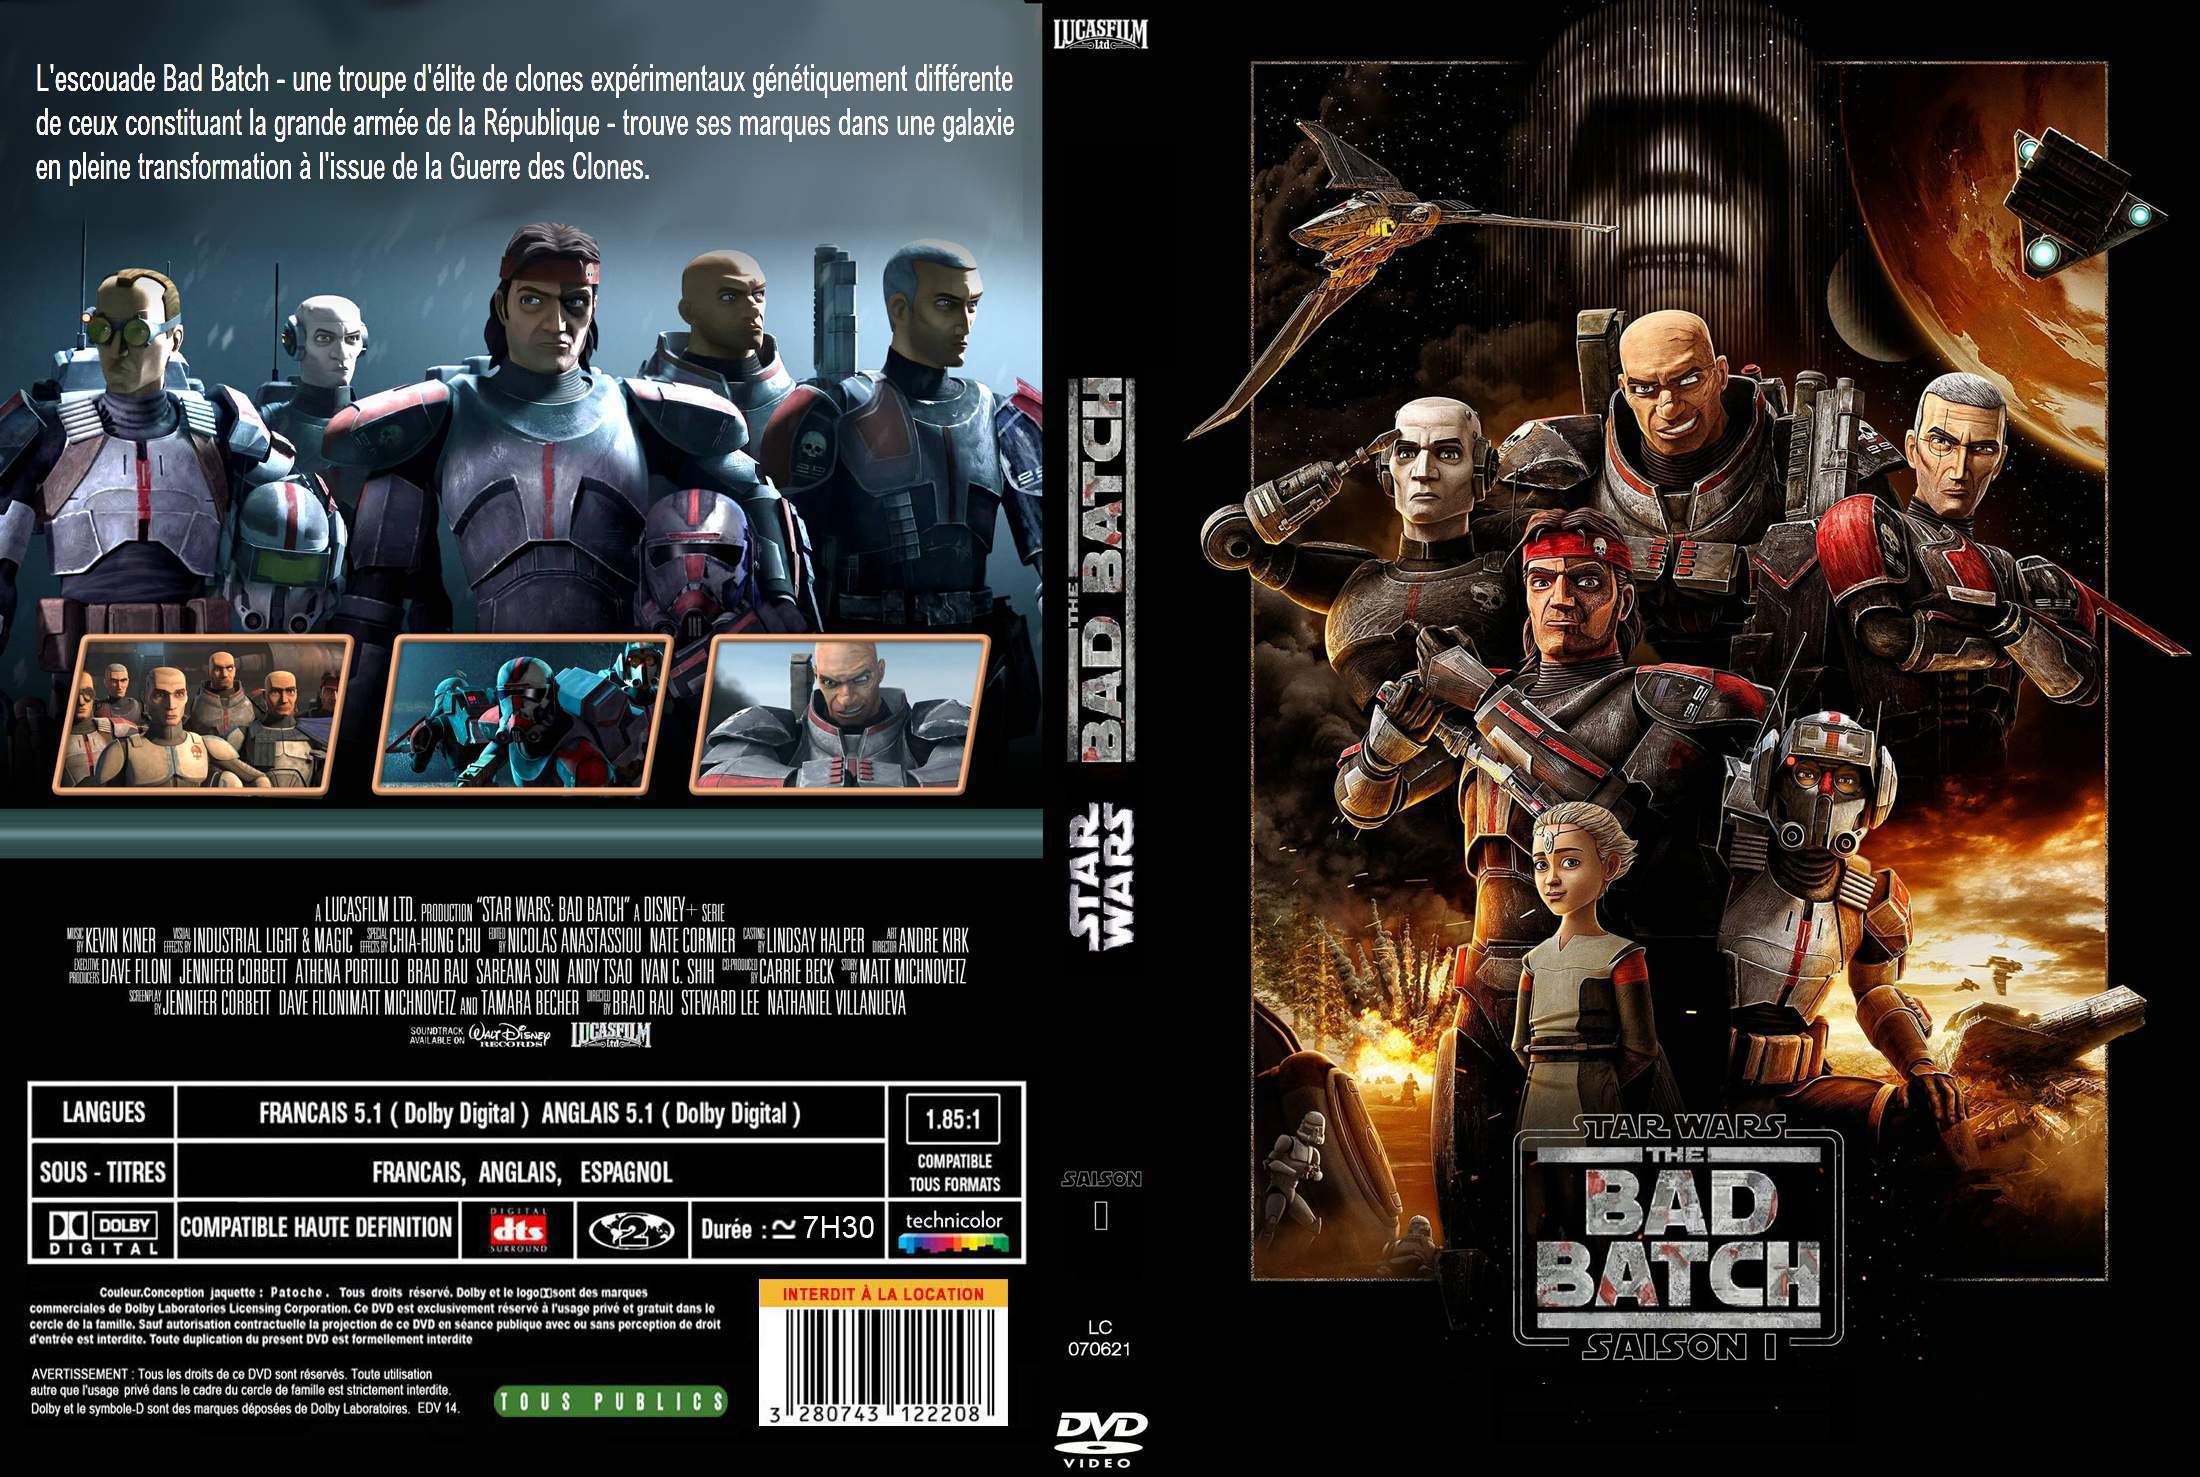 Jaquette DVD Star Wars Bad Batch saison 1 custom